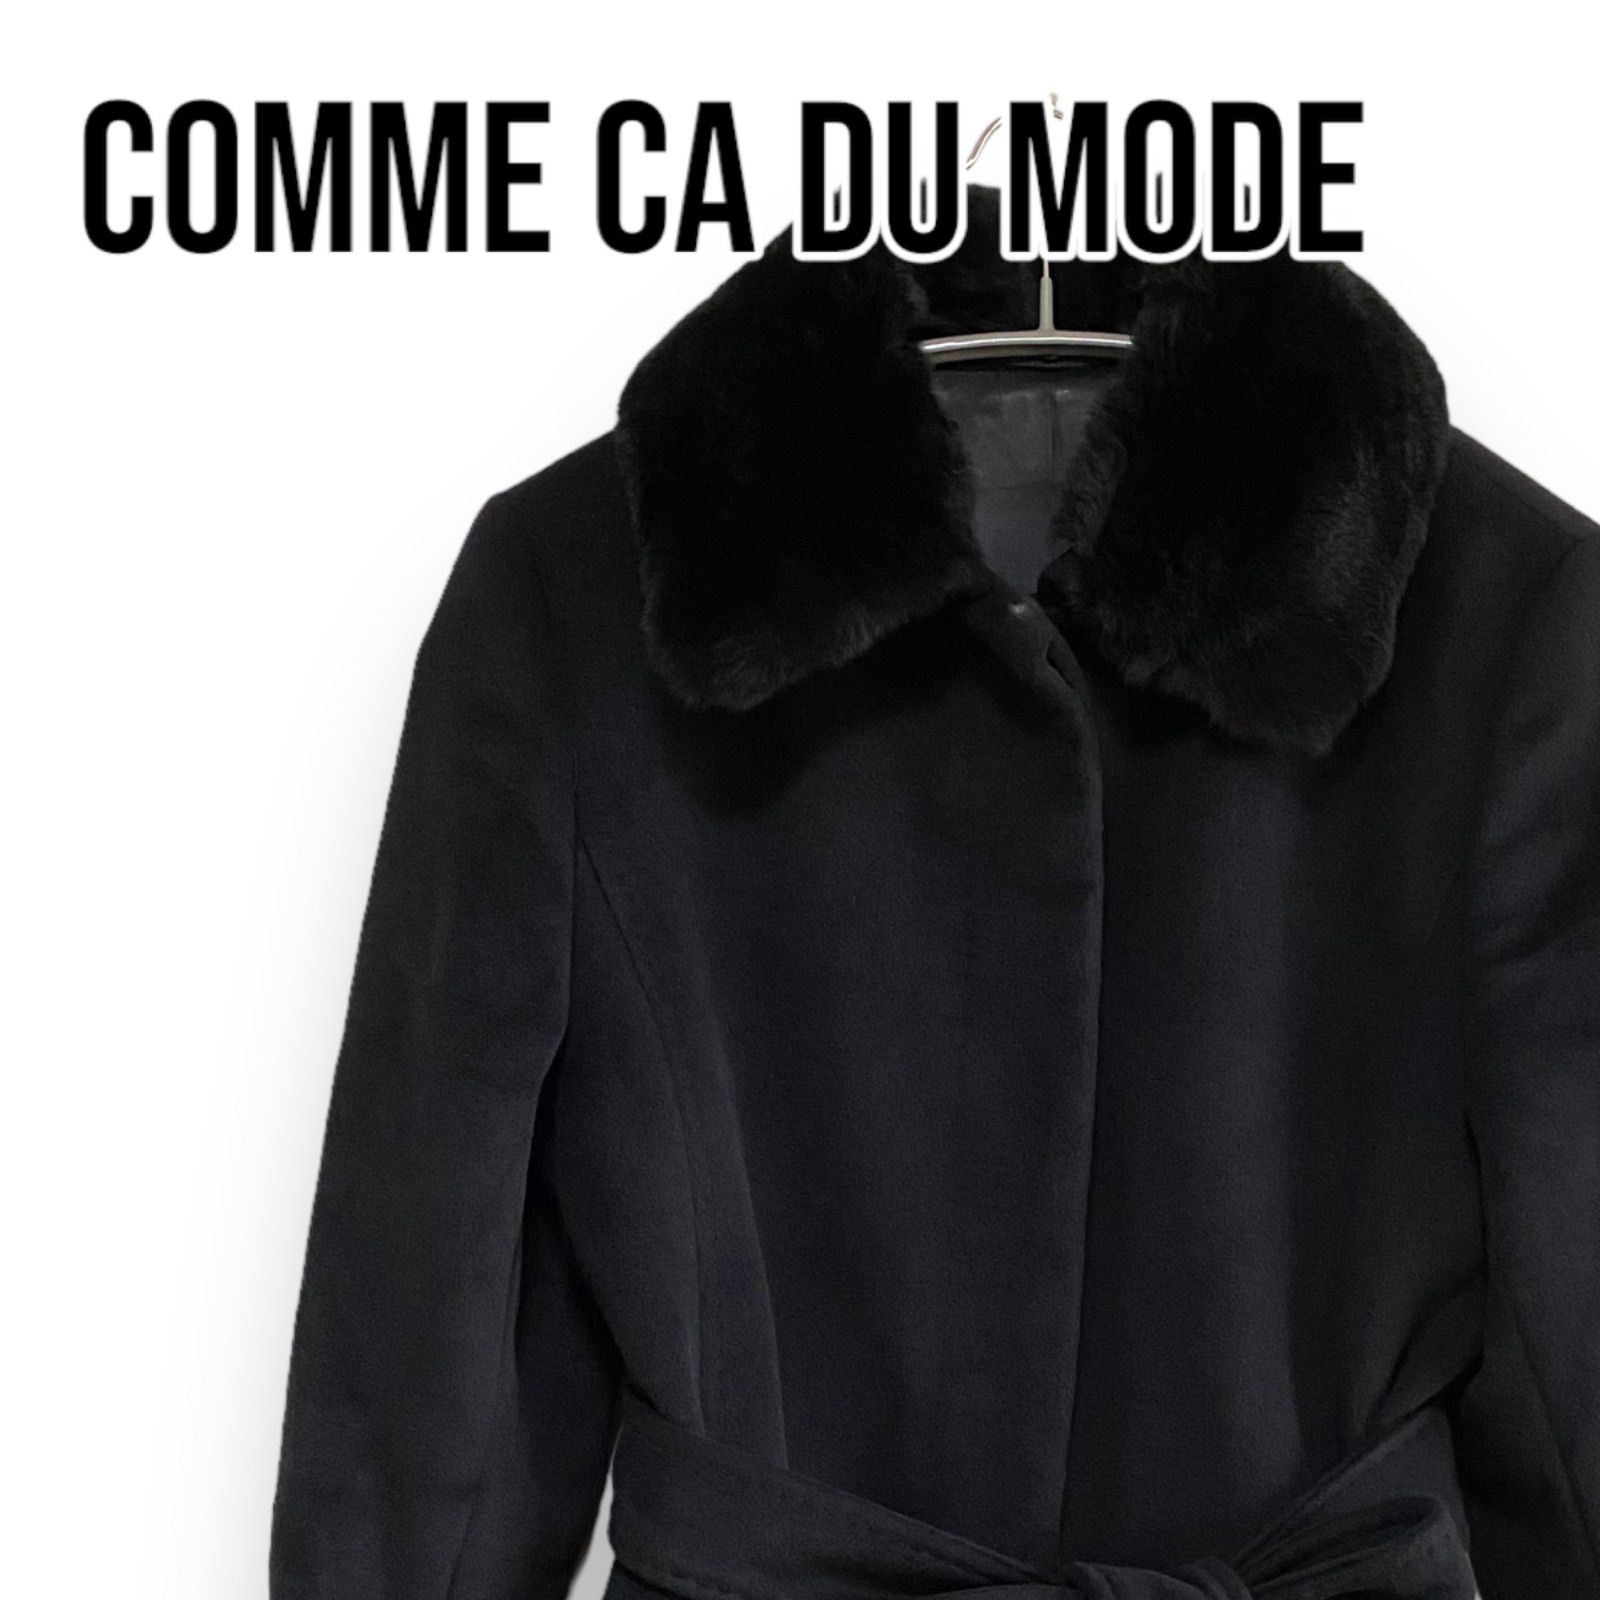 COMME CA DU MODE コムサデモード ショート丈 コート ジャケット アンゴラ100% ファー付 取外し可能 ブラック レディース サイズL